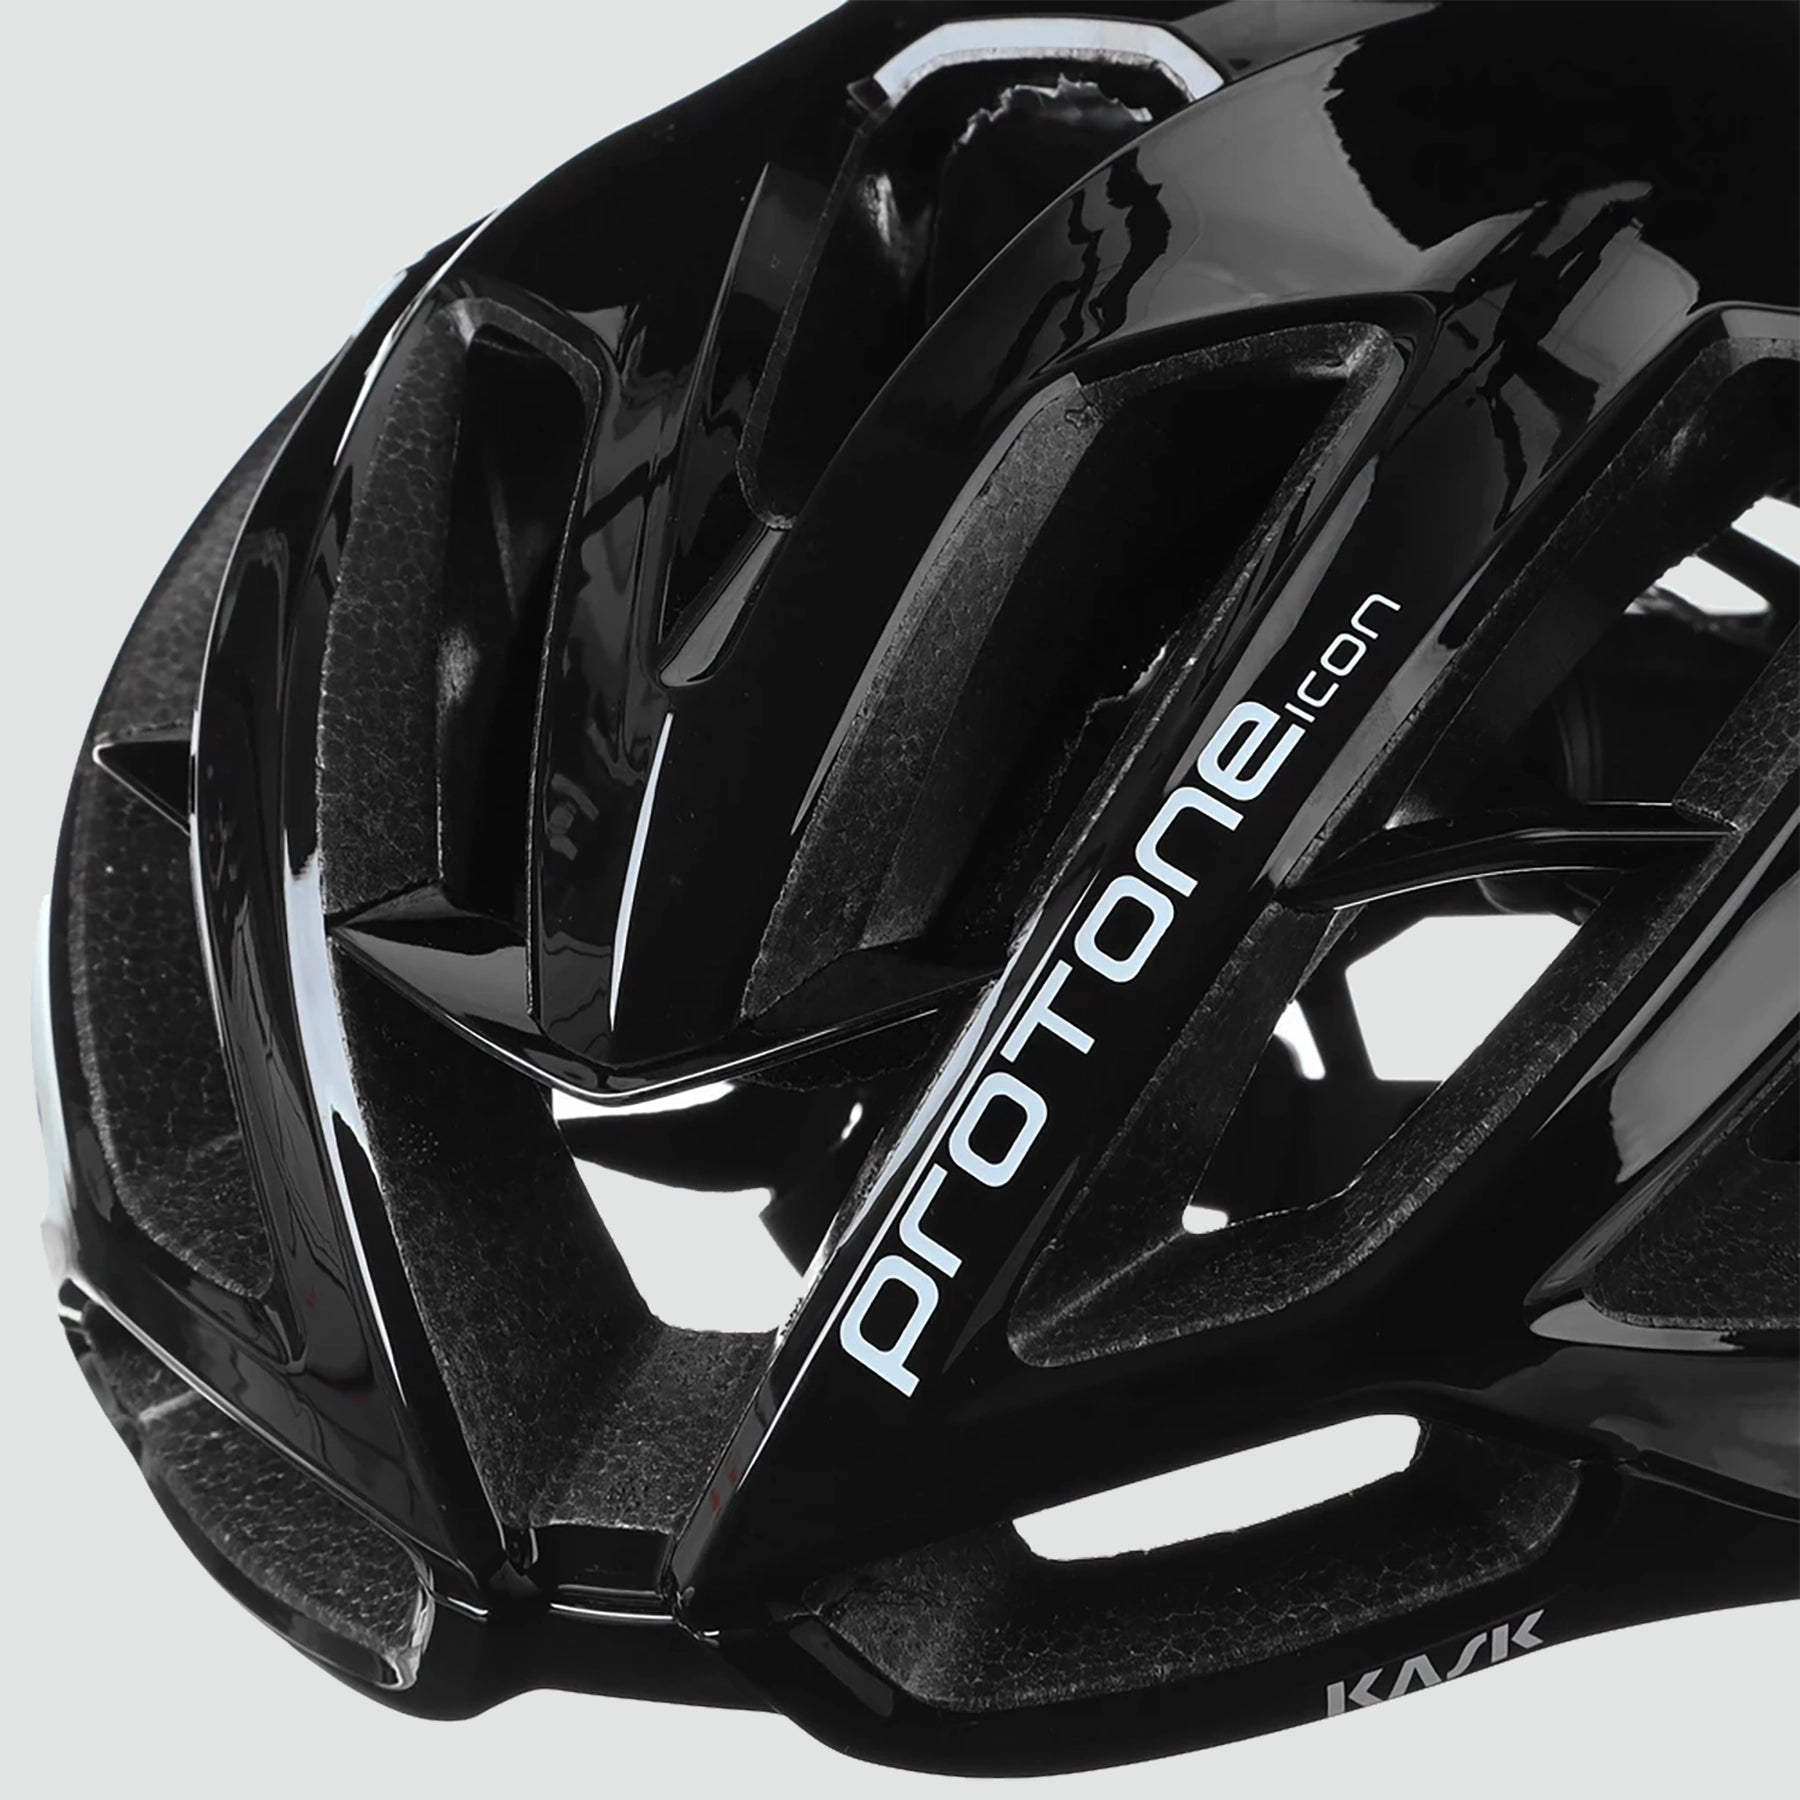 Protone 圖示頭盔 - 黑色